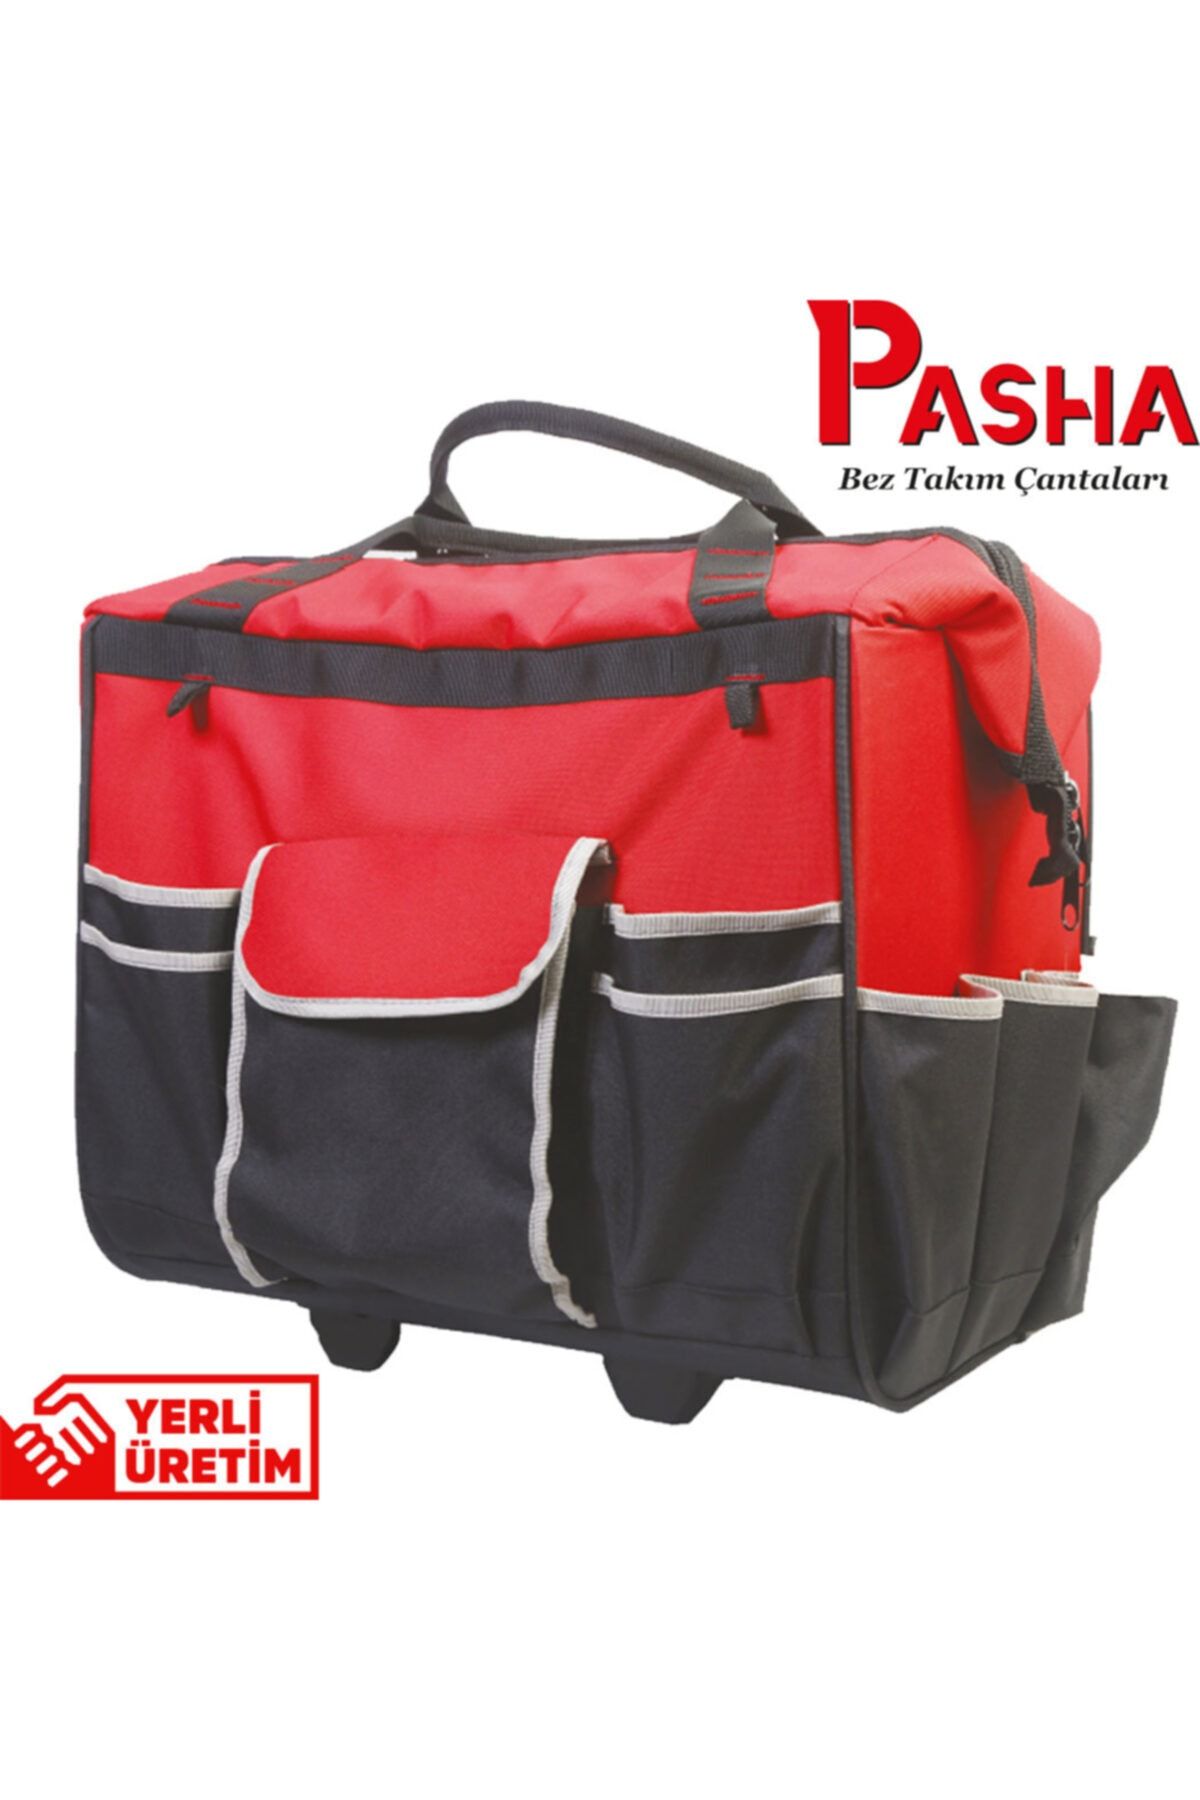 Pasha Ptb01 Tekerlekli Taşıma Çantası